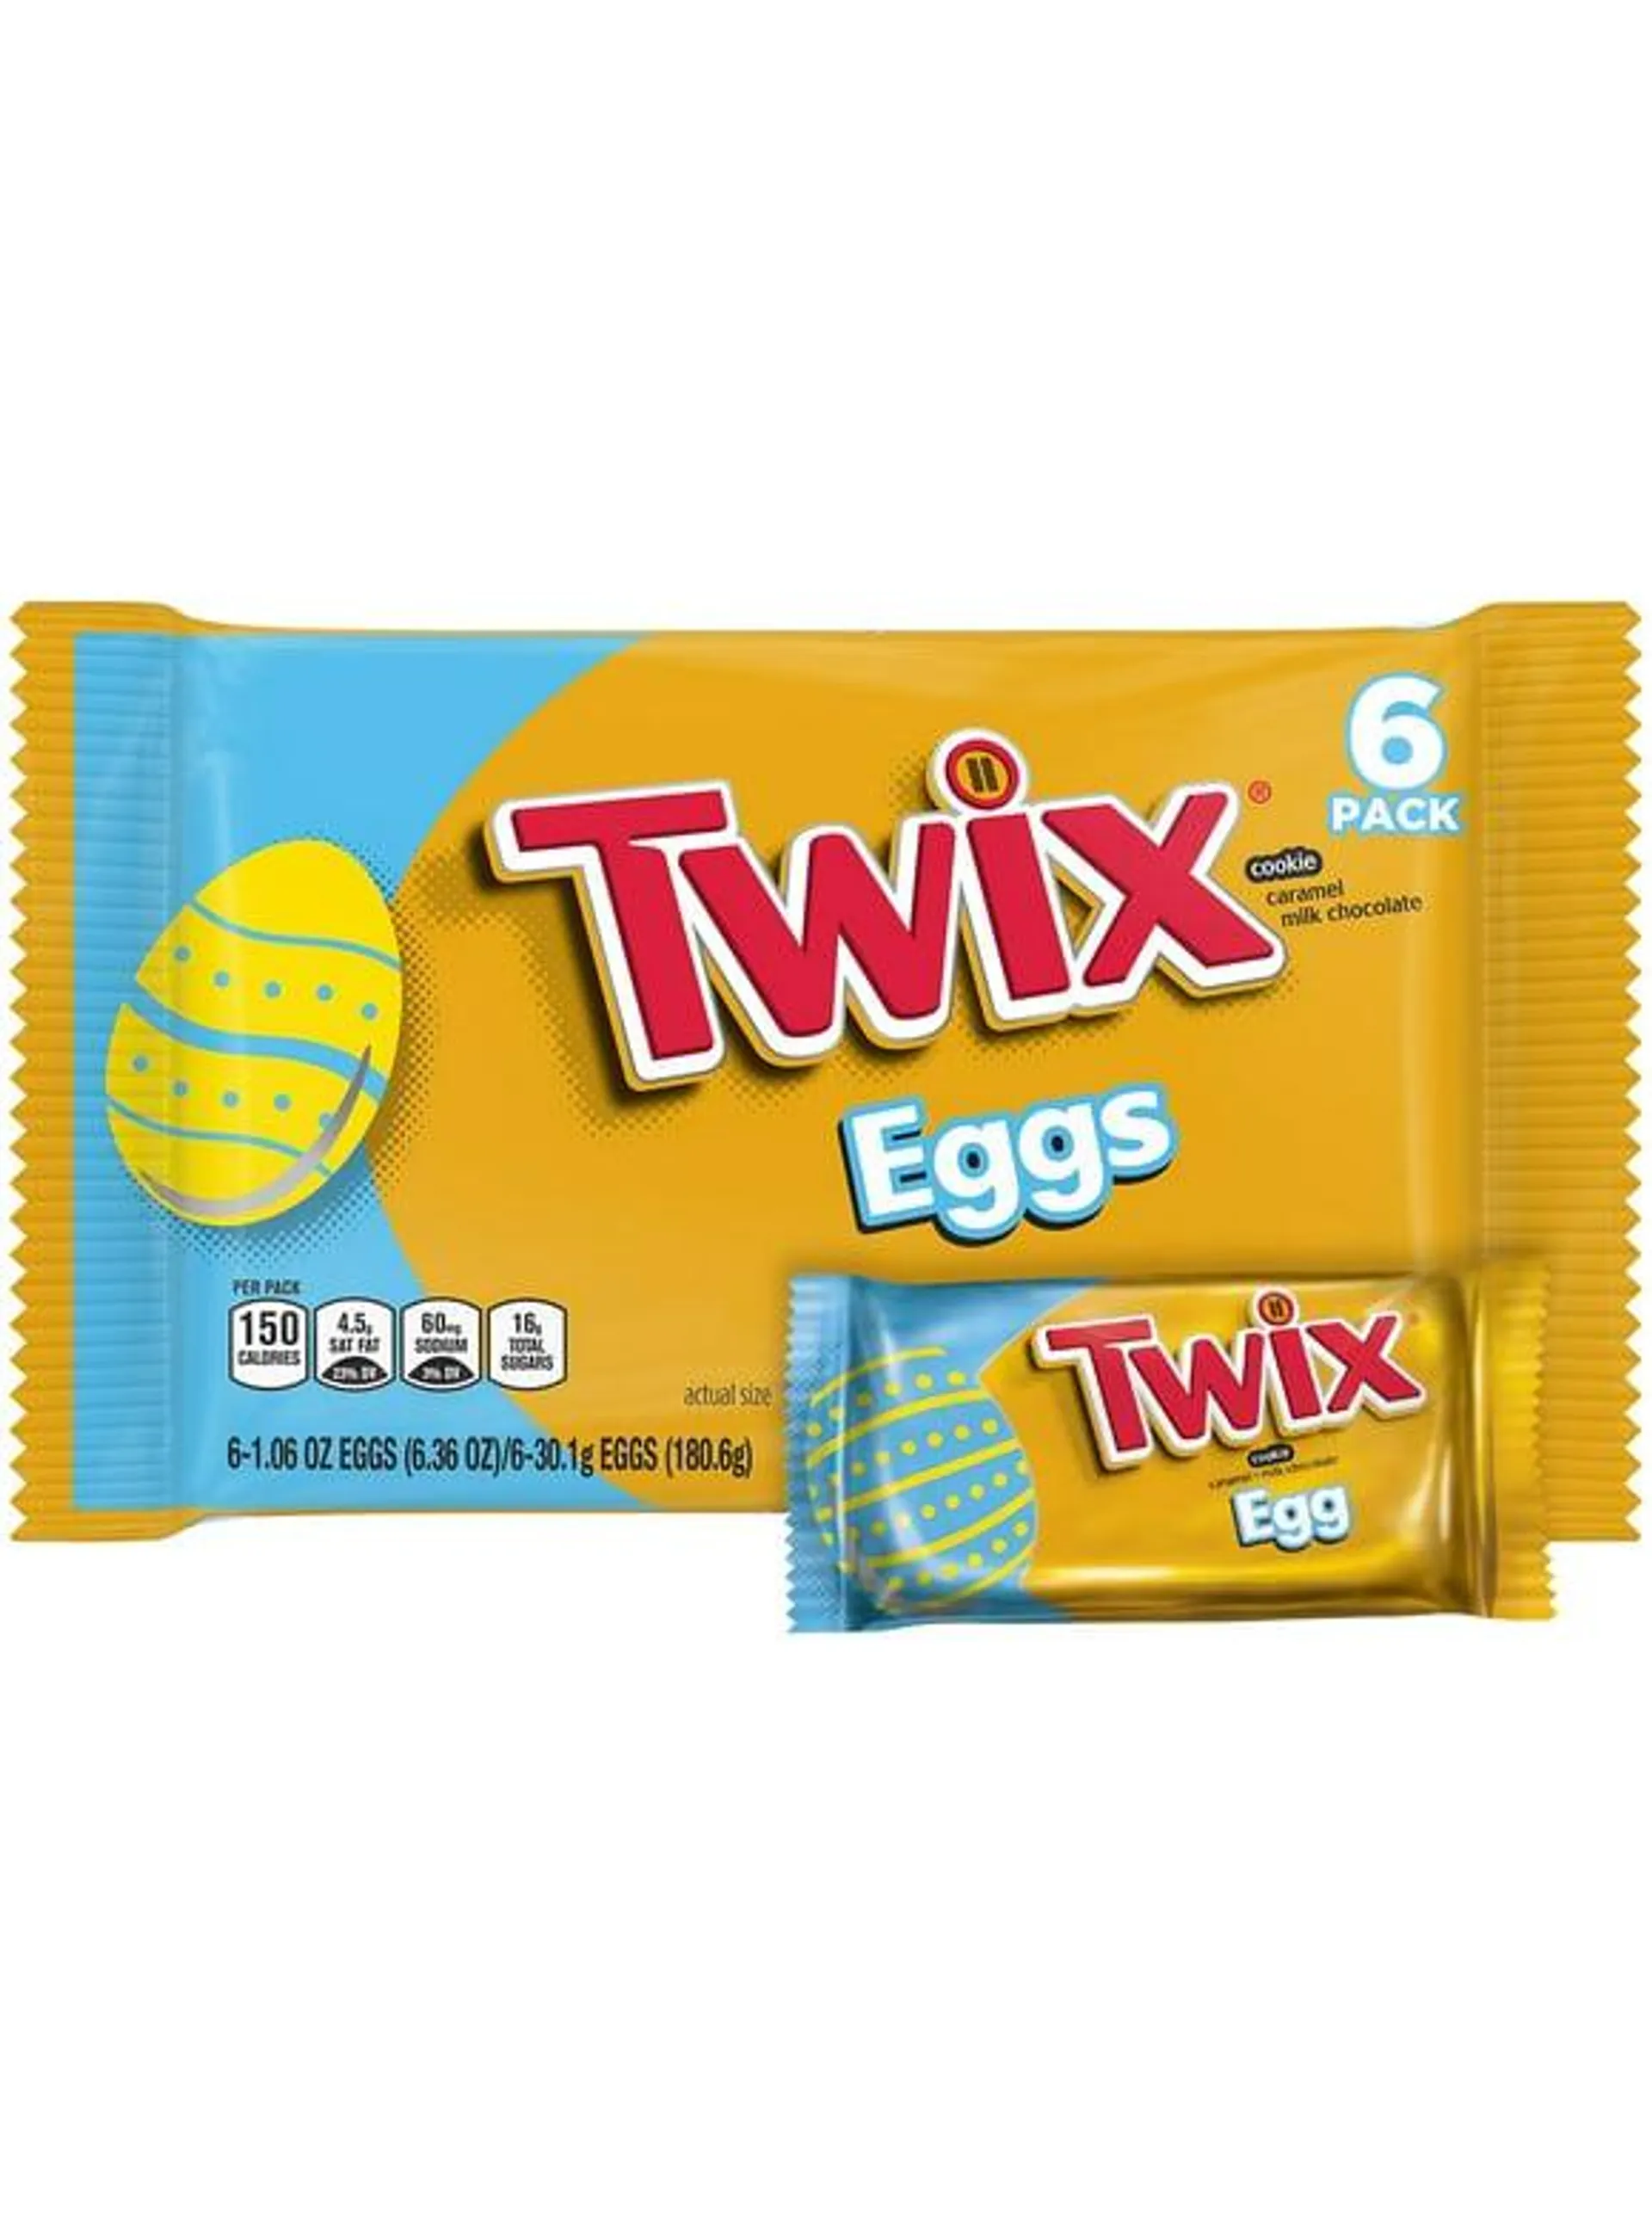 Twix Eggs Milk Chocolate Caramel Candy Bars Easter Basket Stuffers - 6 Ct Pack